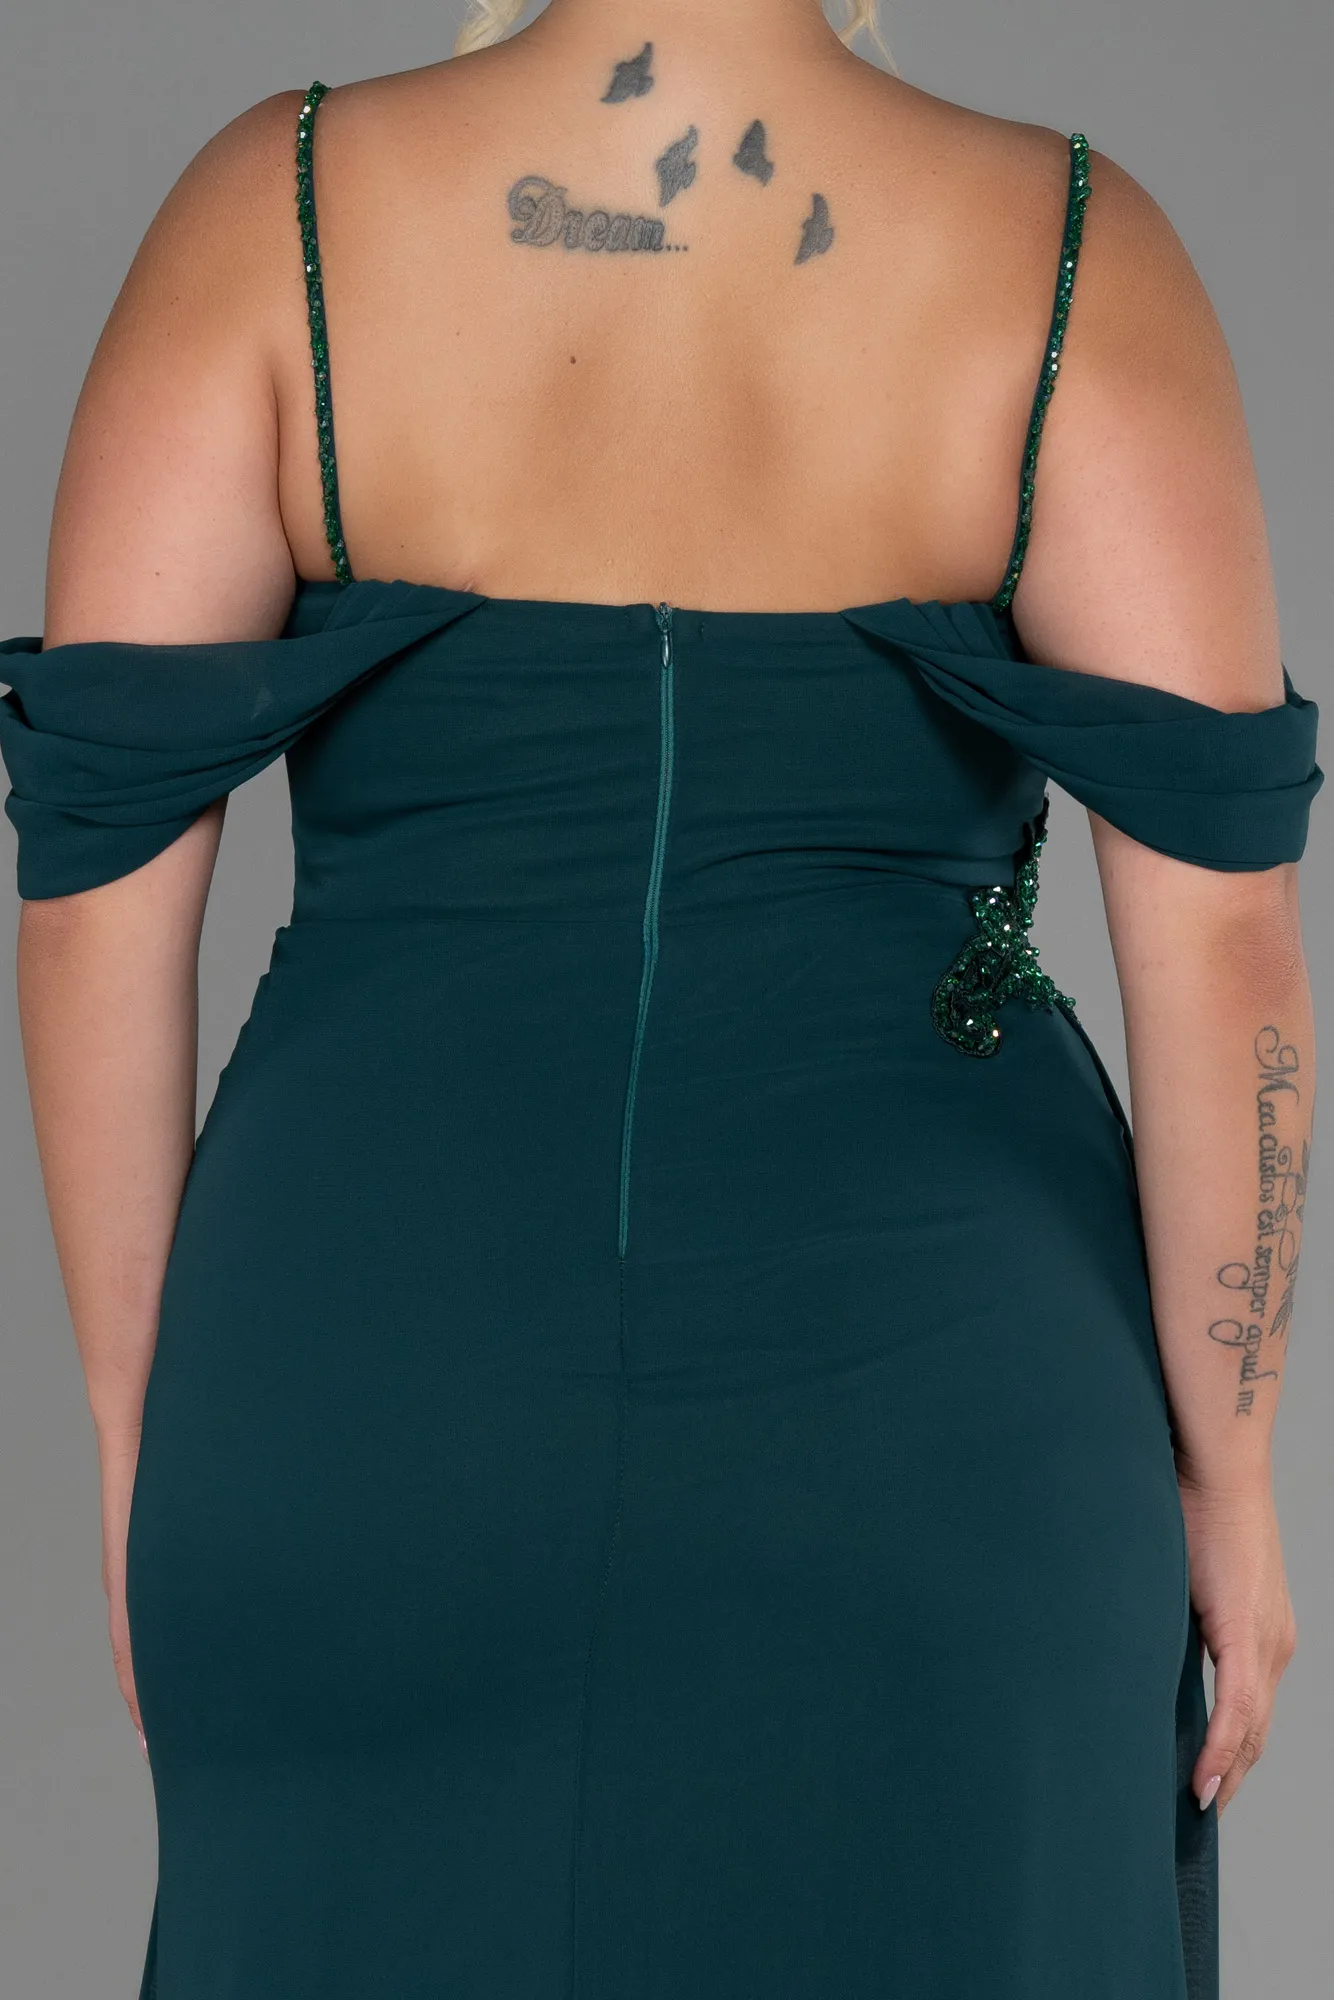 Emerald Green-Long Chiffon Plus Size Evening Dress ABU2929